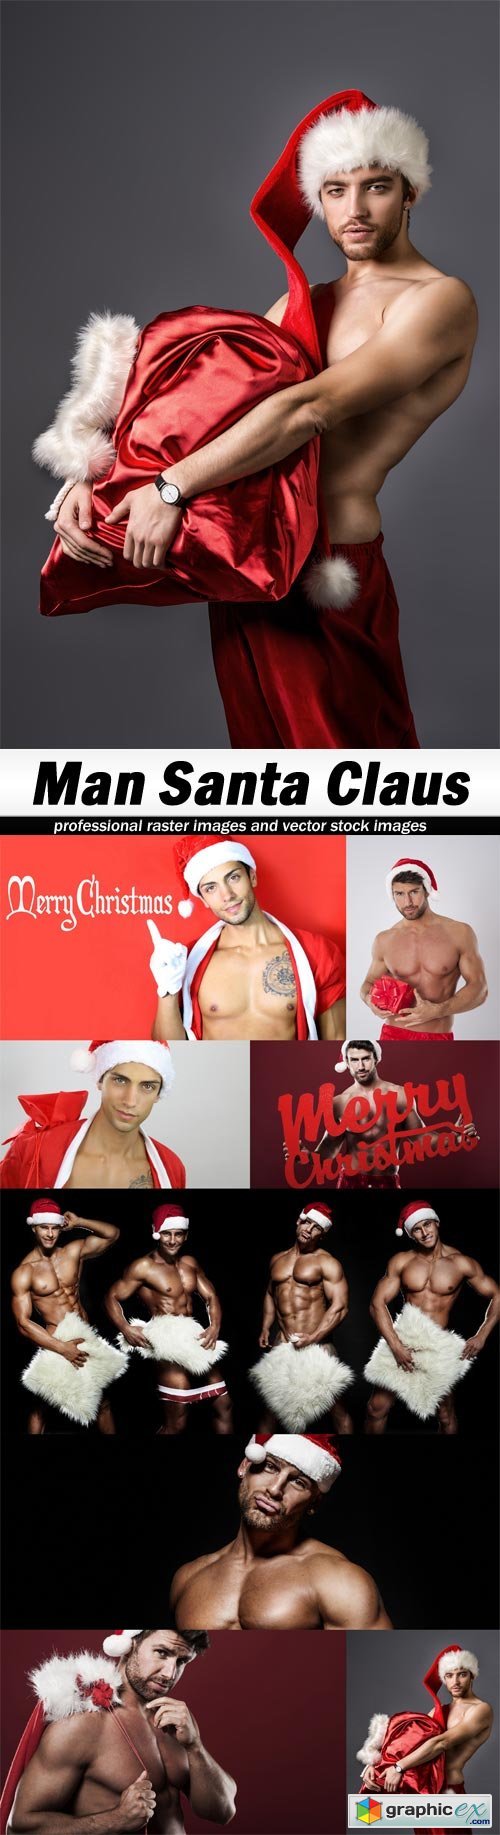 Man Santa Claus